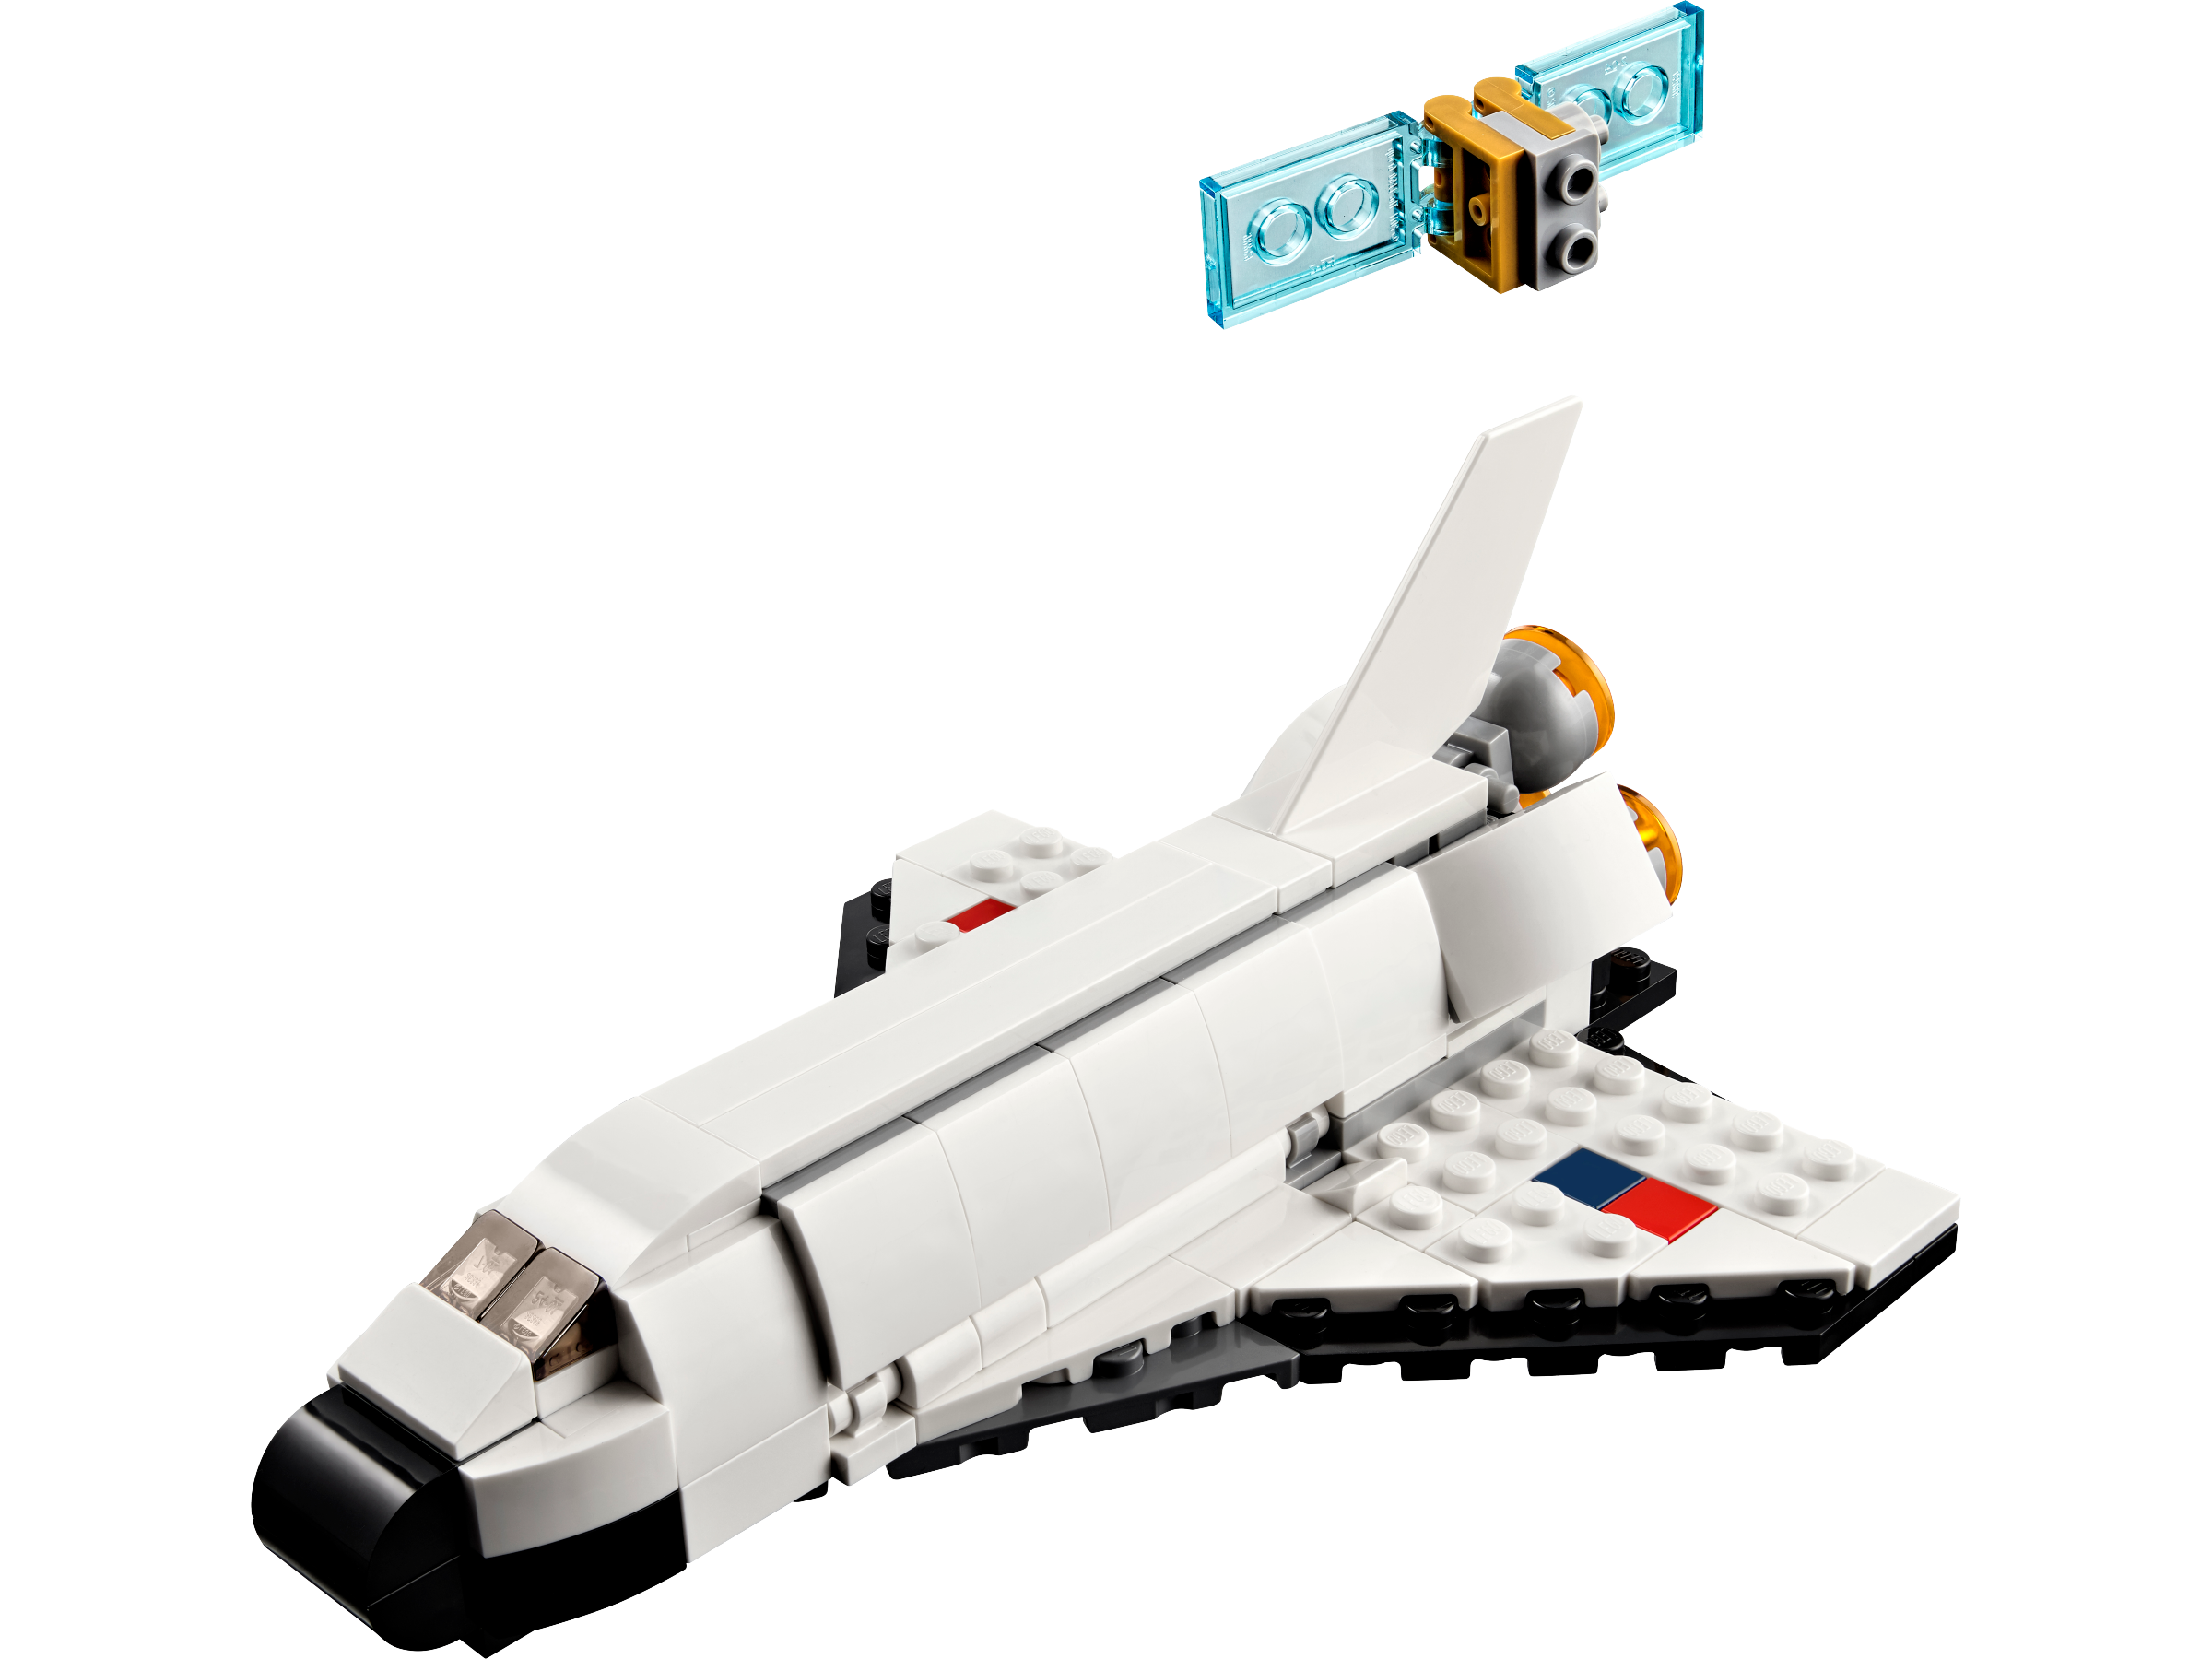 LEGO® Creator 3-in-1-Sets 31134 Spaceshuttle